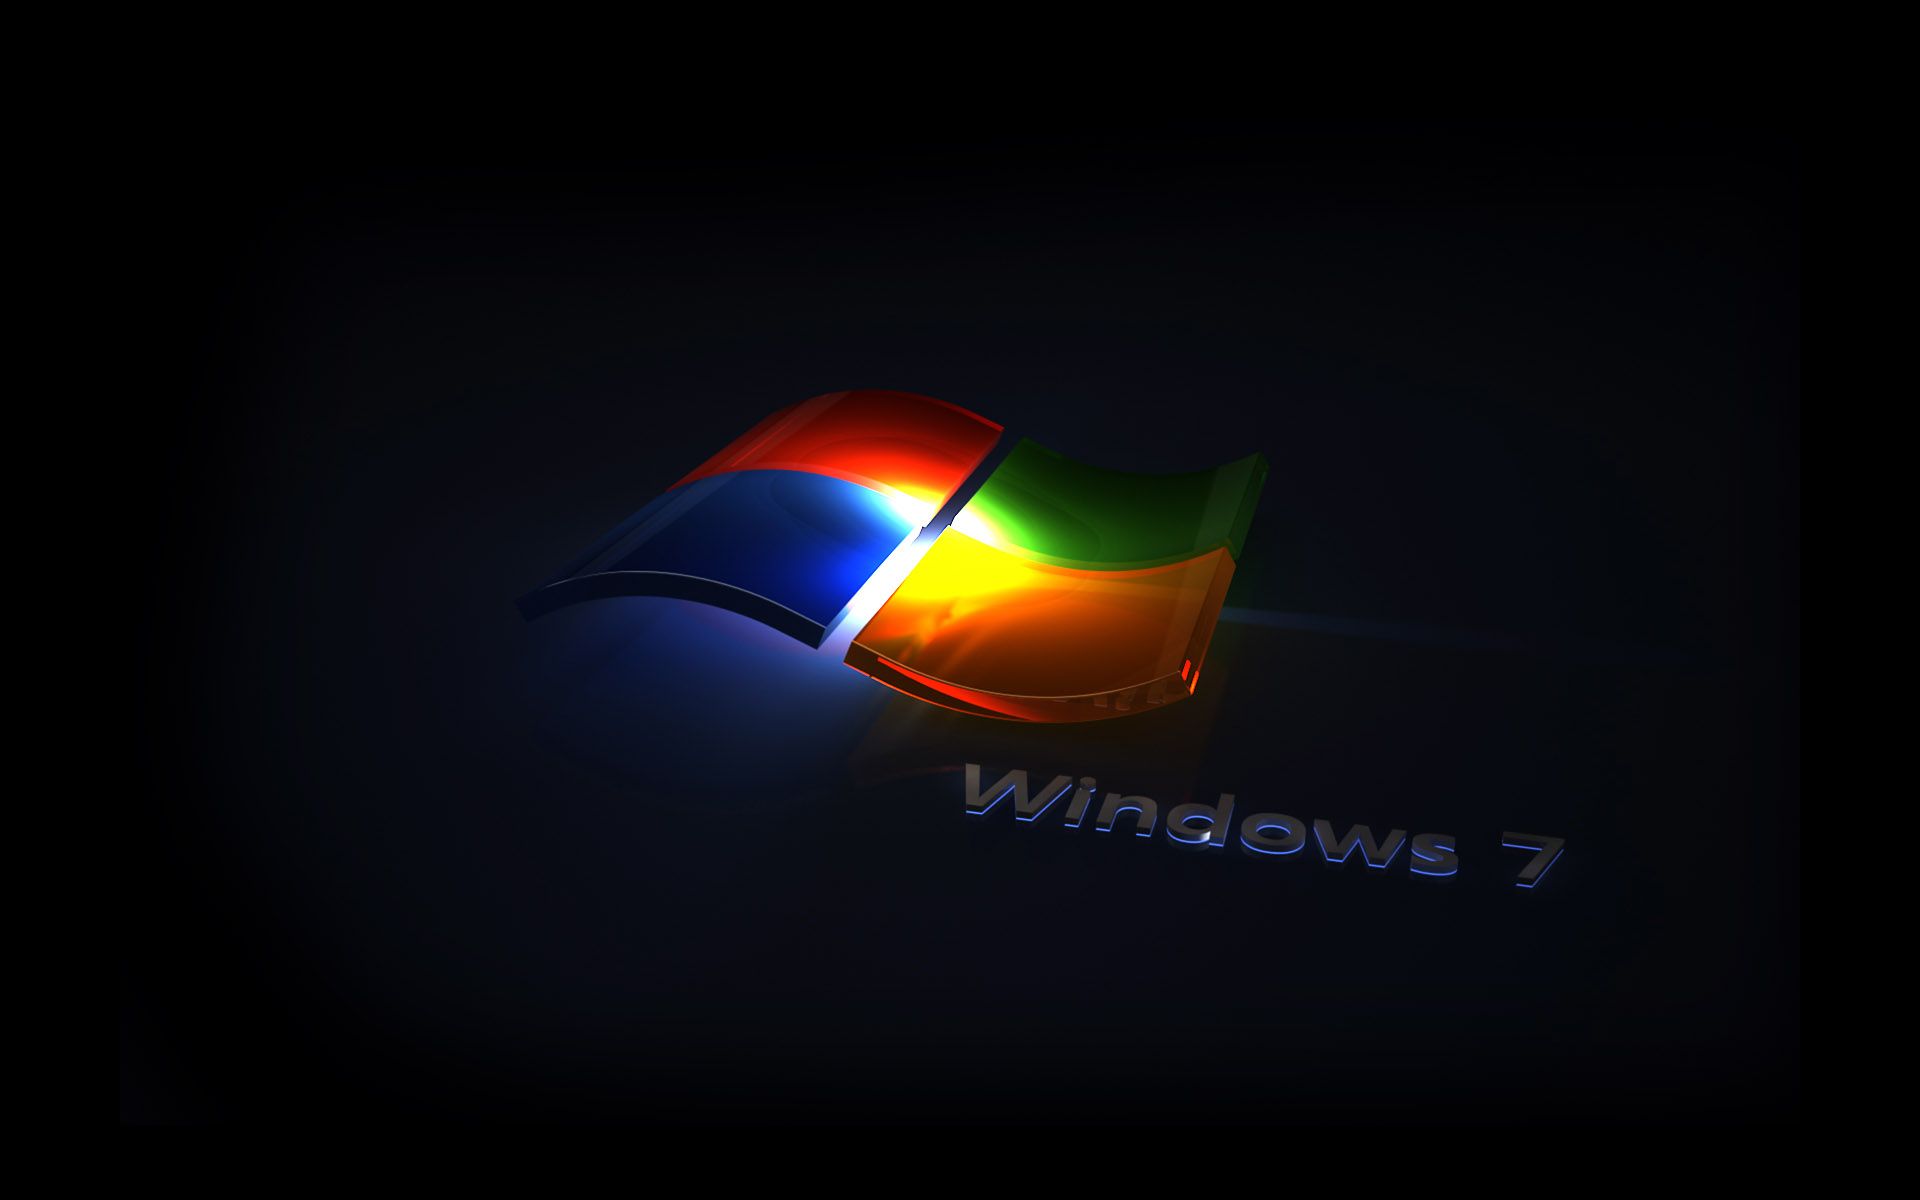 Wallpaper Windows 7 Ultimate Hd 3d For Laptop Image Num 14